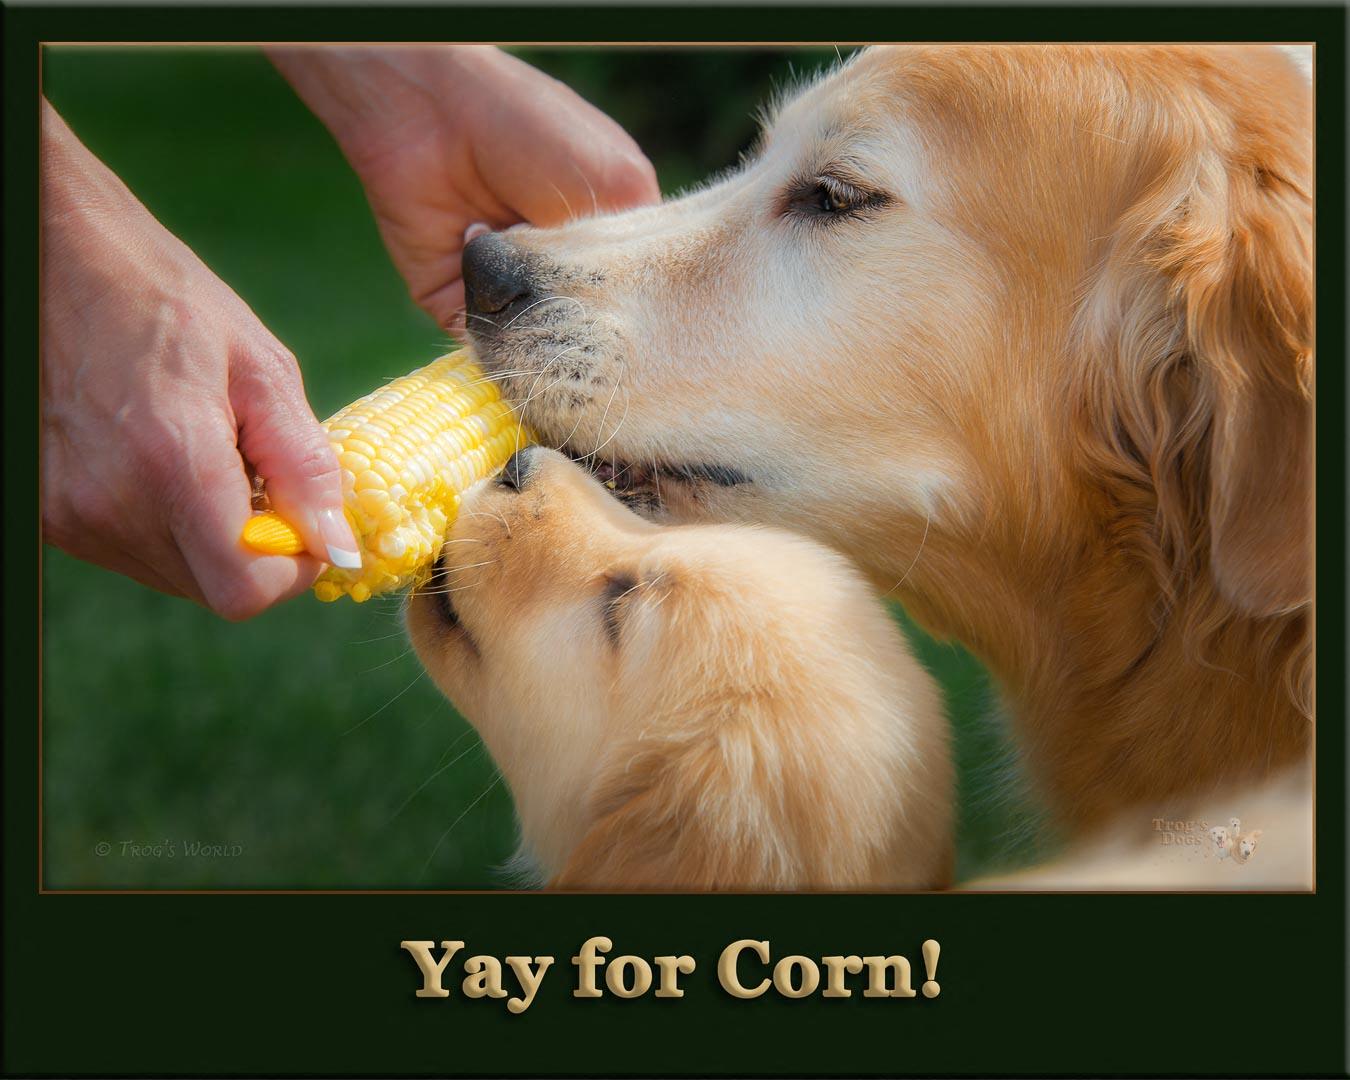 Two golden retrievers eat corn on the cob